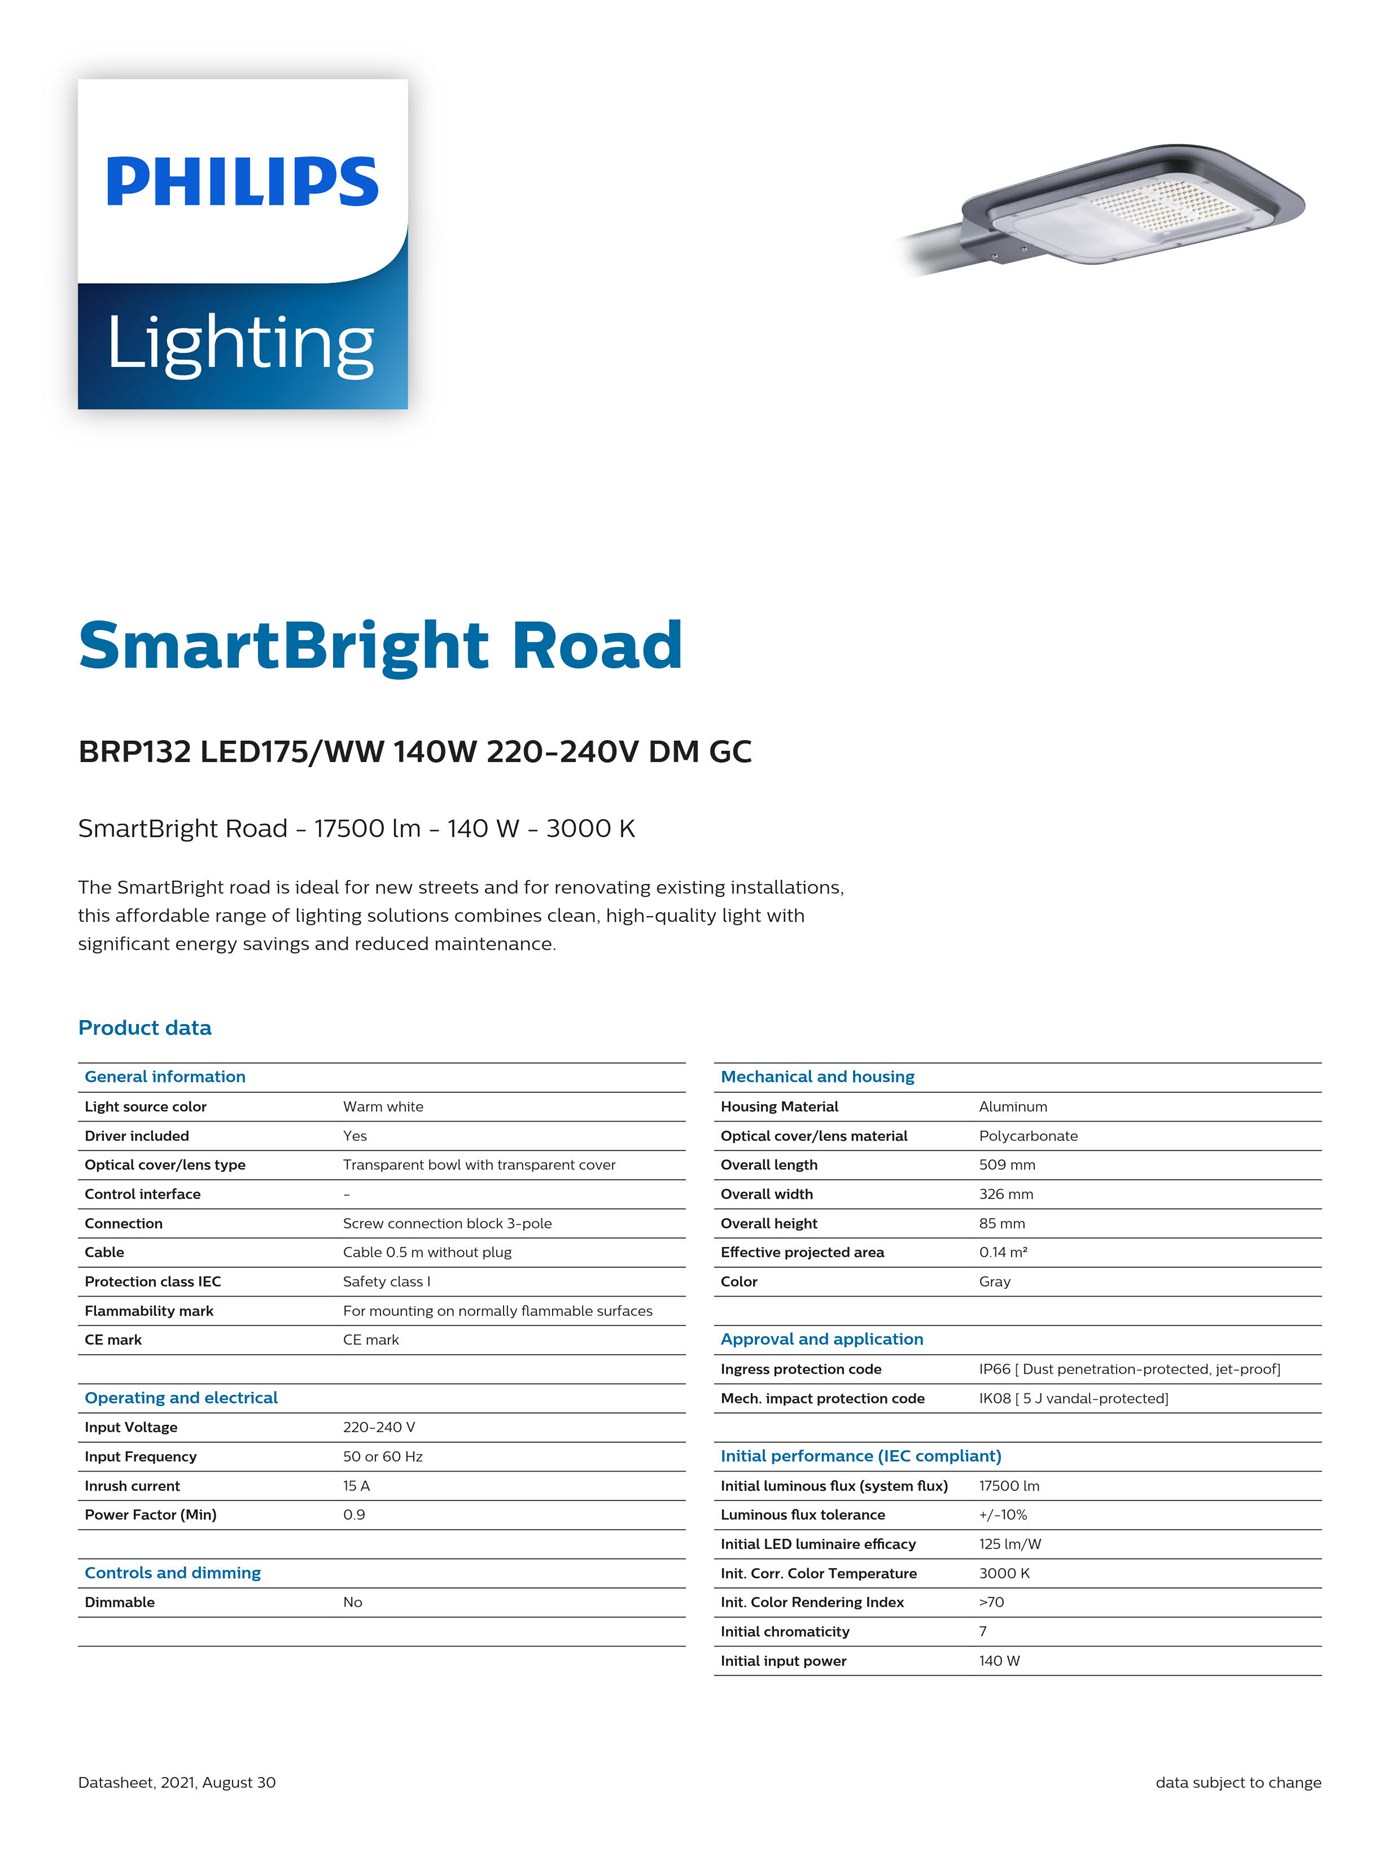 PHILIPS SmartBright Road BRP132 LED175/WW 140W 220-240V DM GC 911401675607